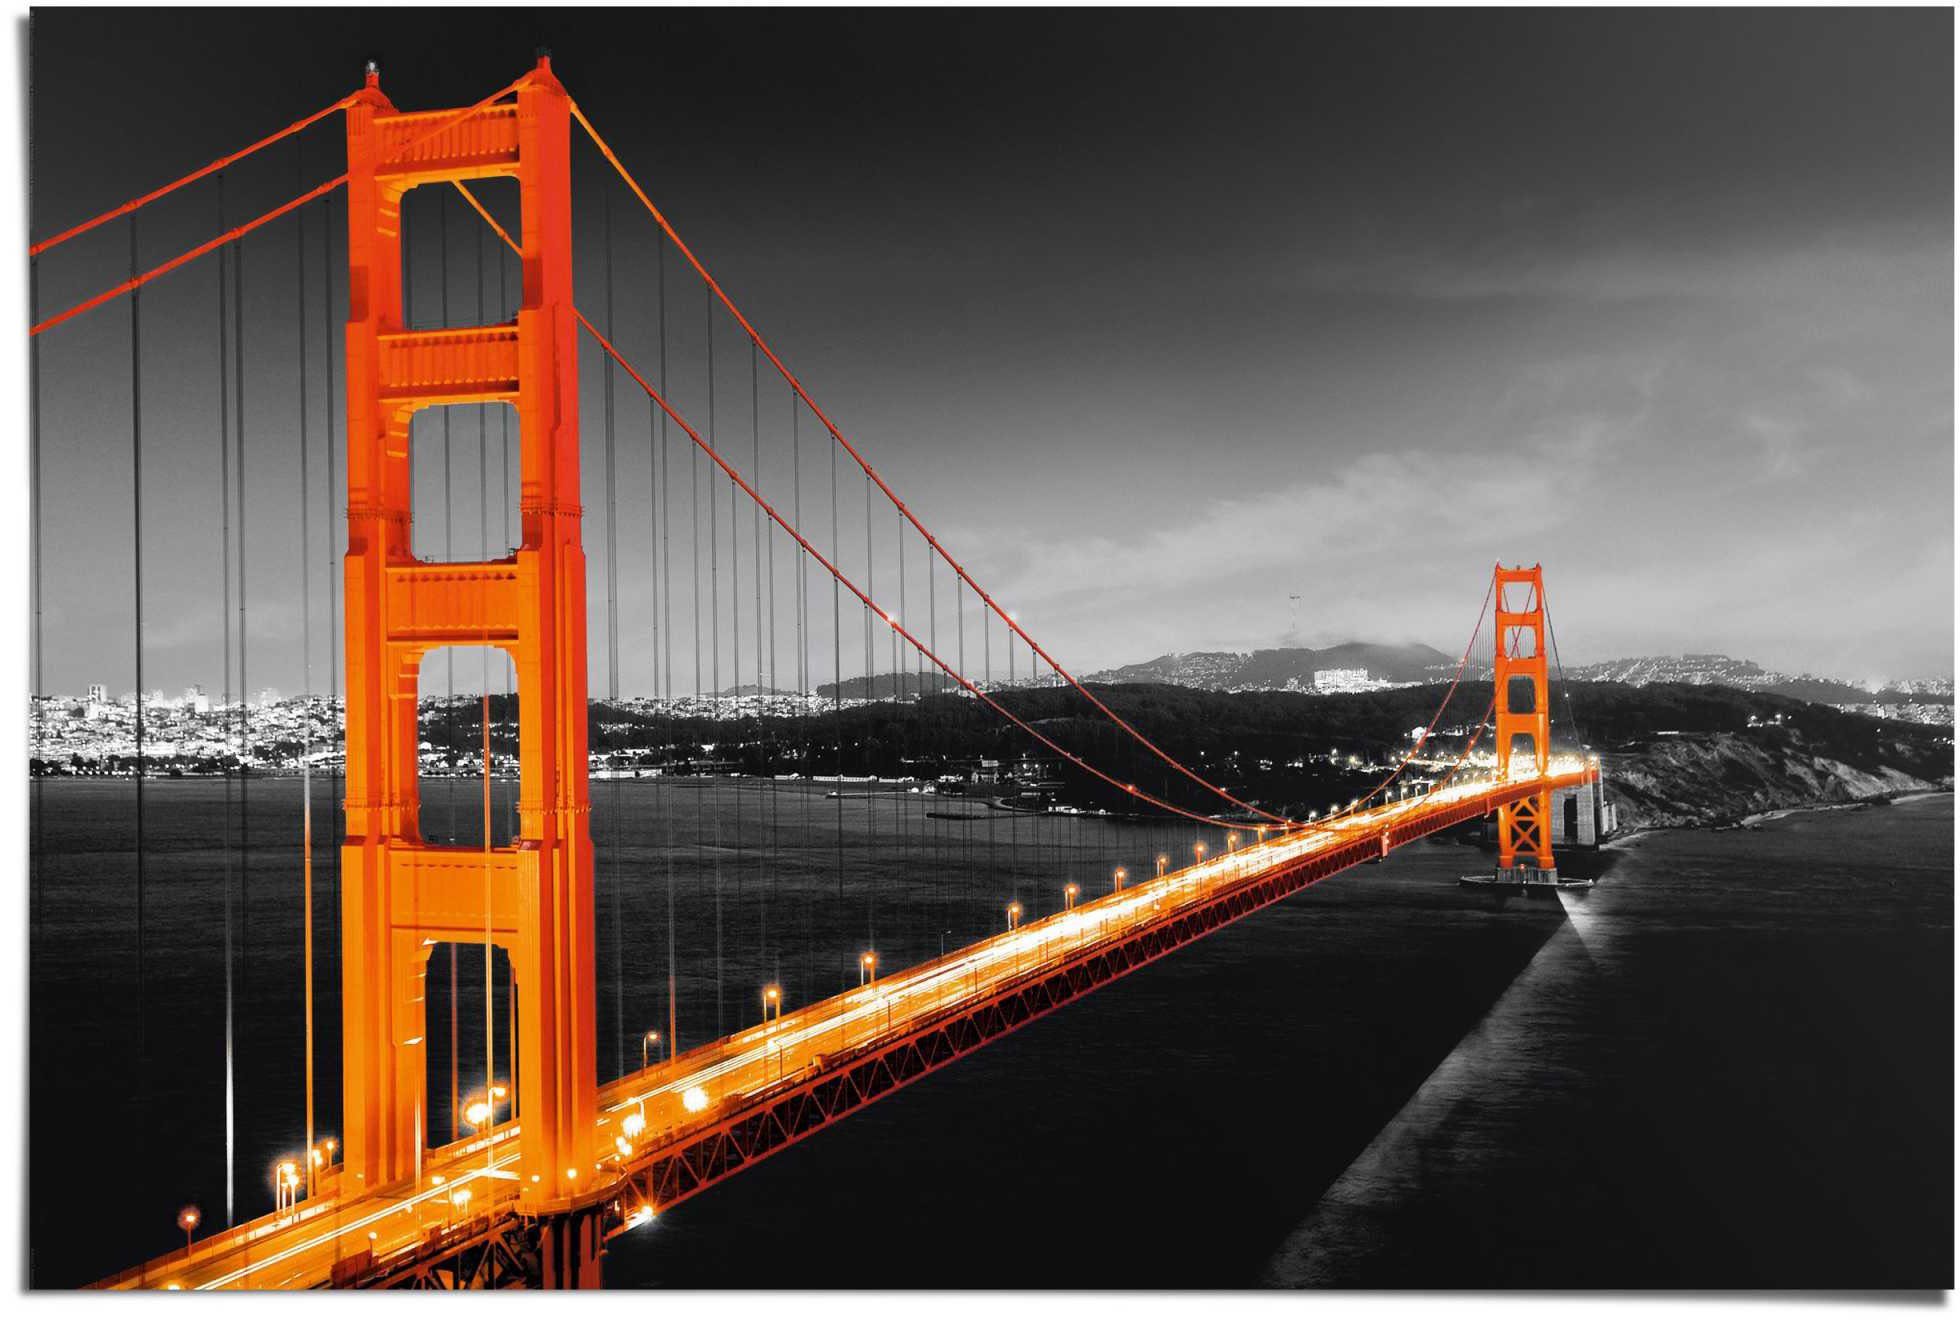 Beliebtester Artikel in unserem Geschäft Reinders! Poster San Fransisco Golden Gate St) (1 Brücke